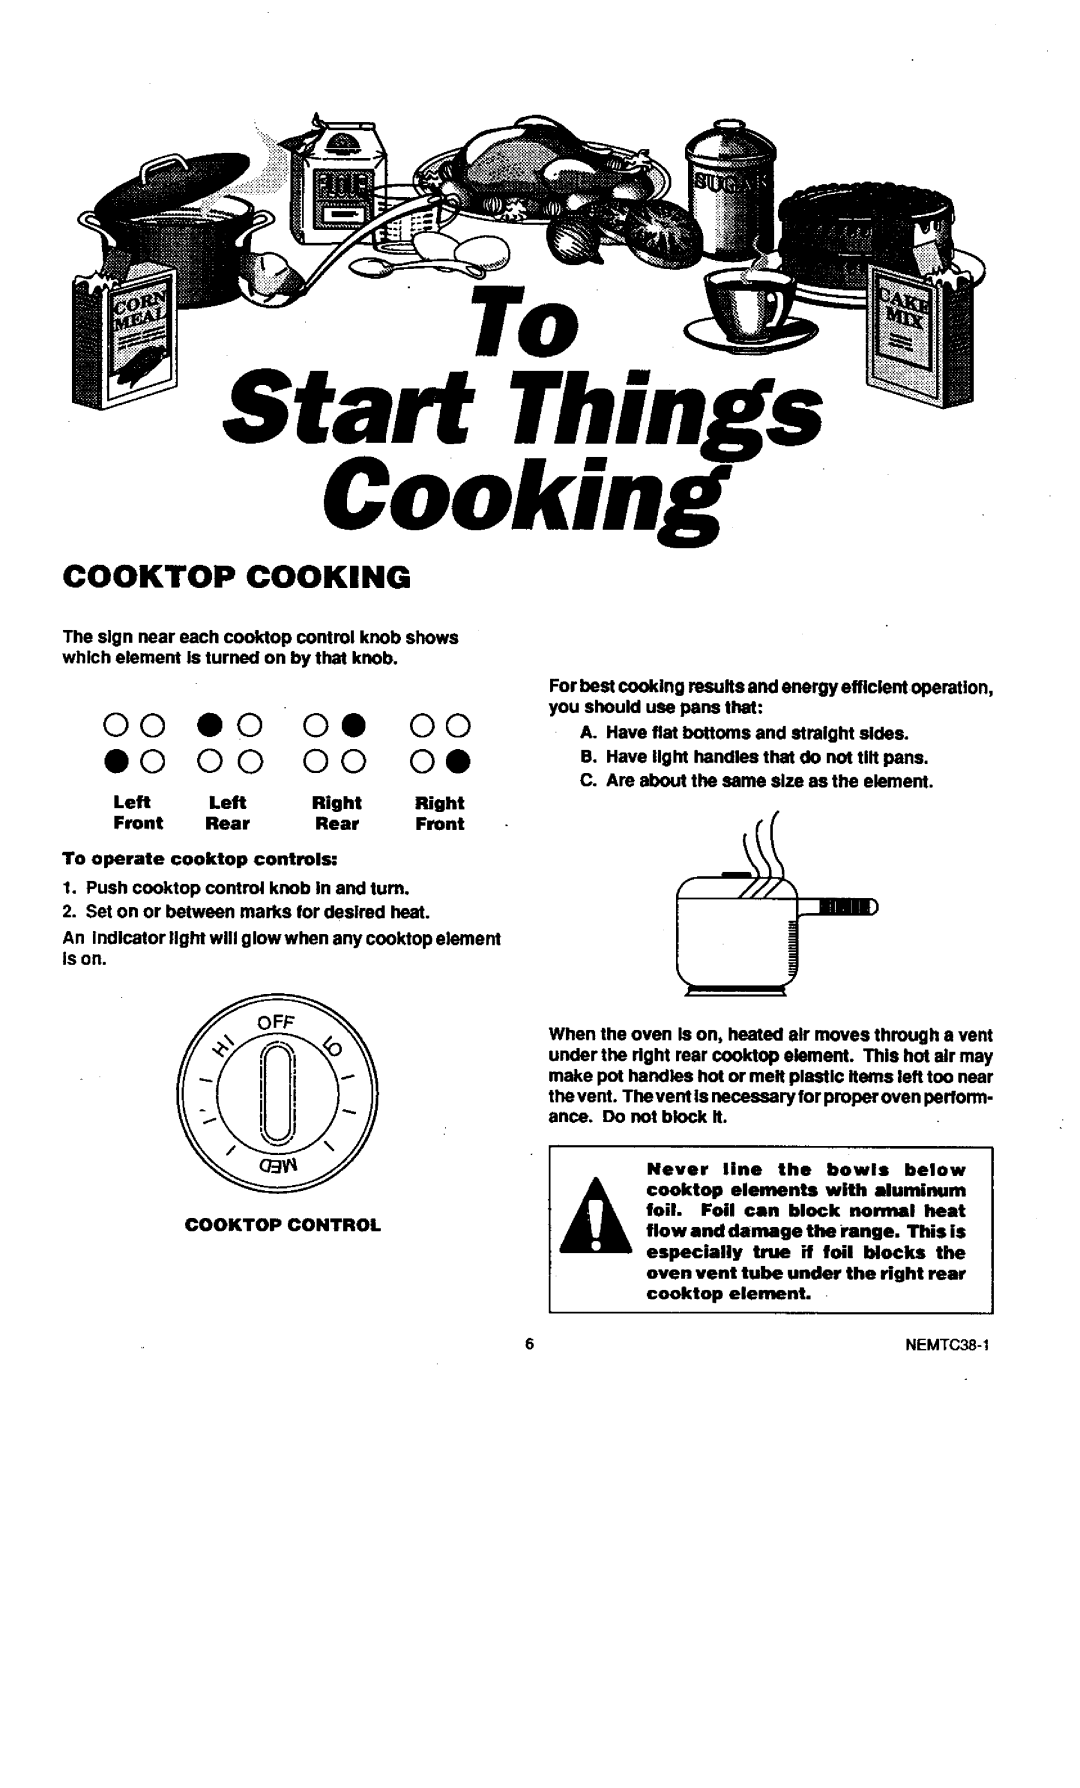 Sears 45520, 45521 warranty Cooktopcooking, To Start Things Cooking, O0 eO Oe O0 eO O0 O0 Oe 